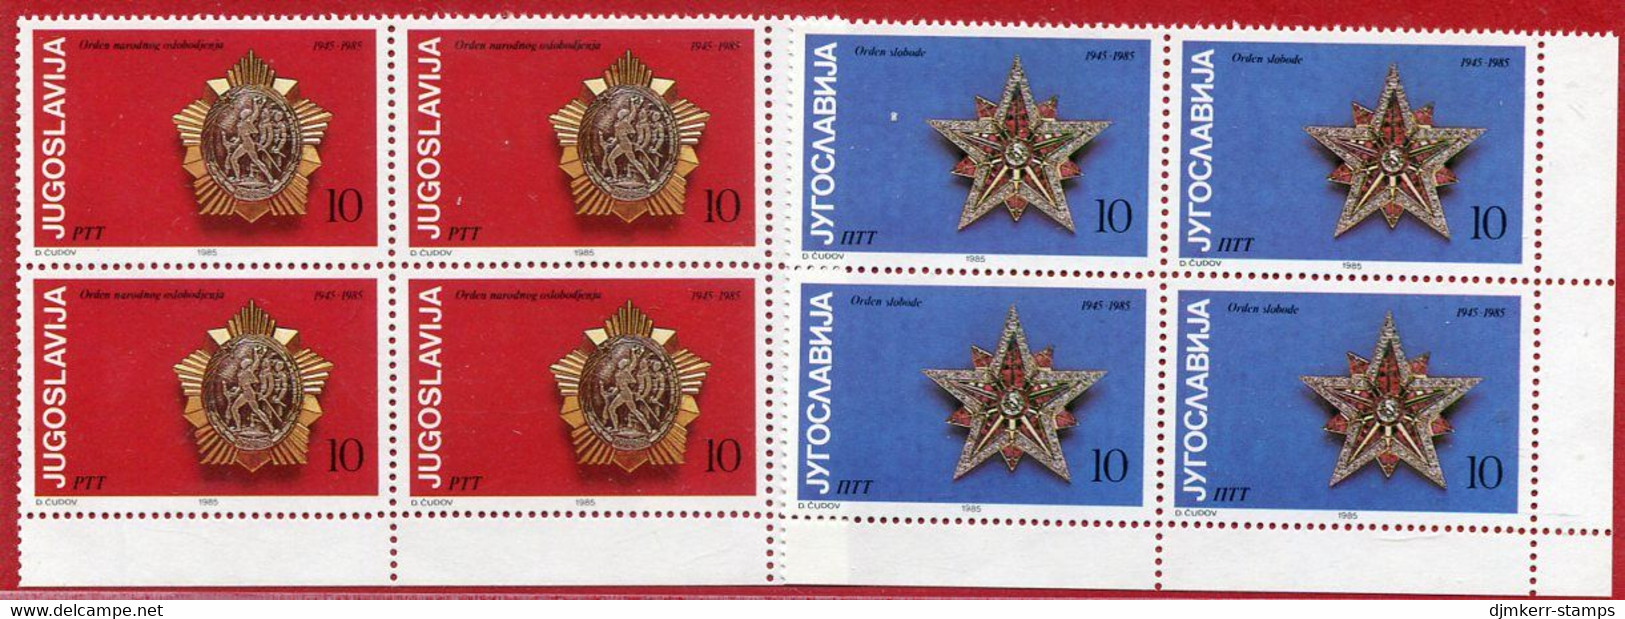 YUGOSLAVIA 1985 Anniversary Of Victory Blocks Of 4 MNH / **.  Michel 2107-08 - Nuovi